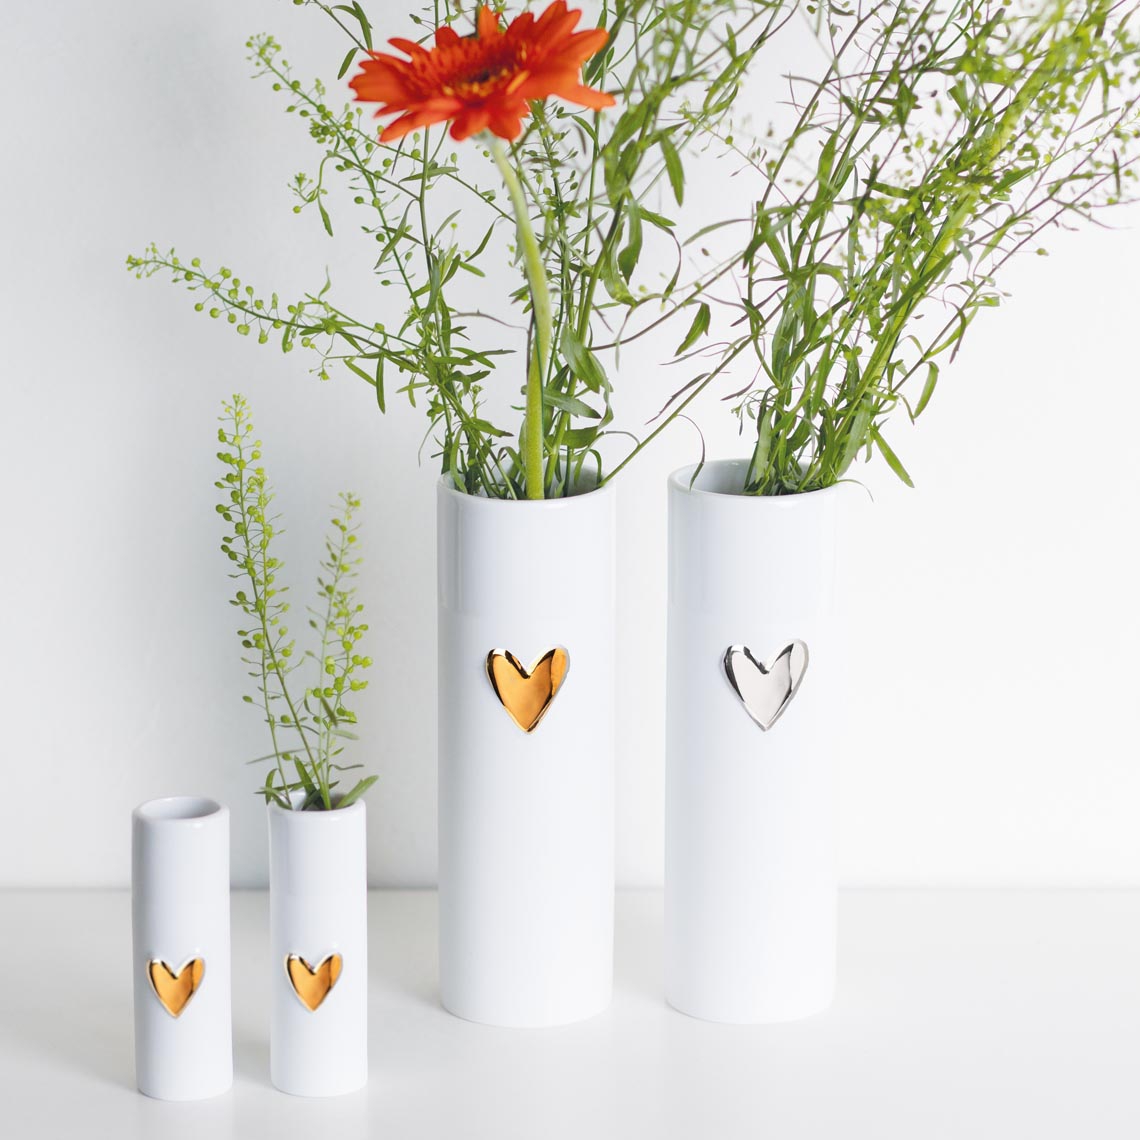 Einmachglas, Pflanzgefäß, Pflanze im Topf, Töpferei, Vase